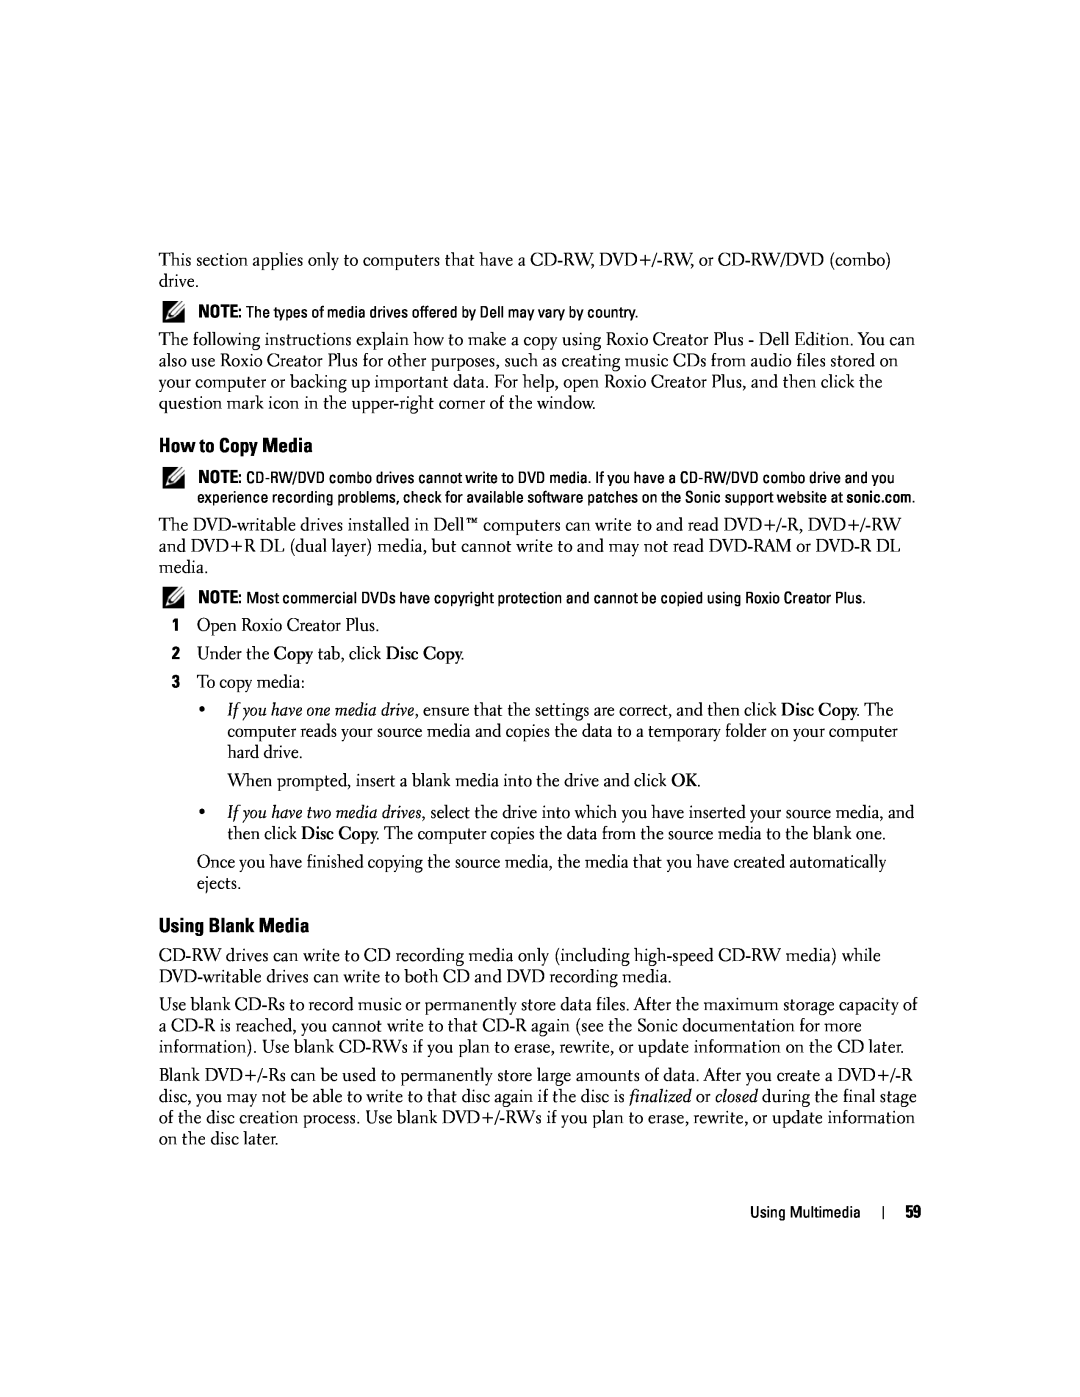 Dell PP24L manual How to Copy Media, Using Blank Media 